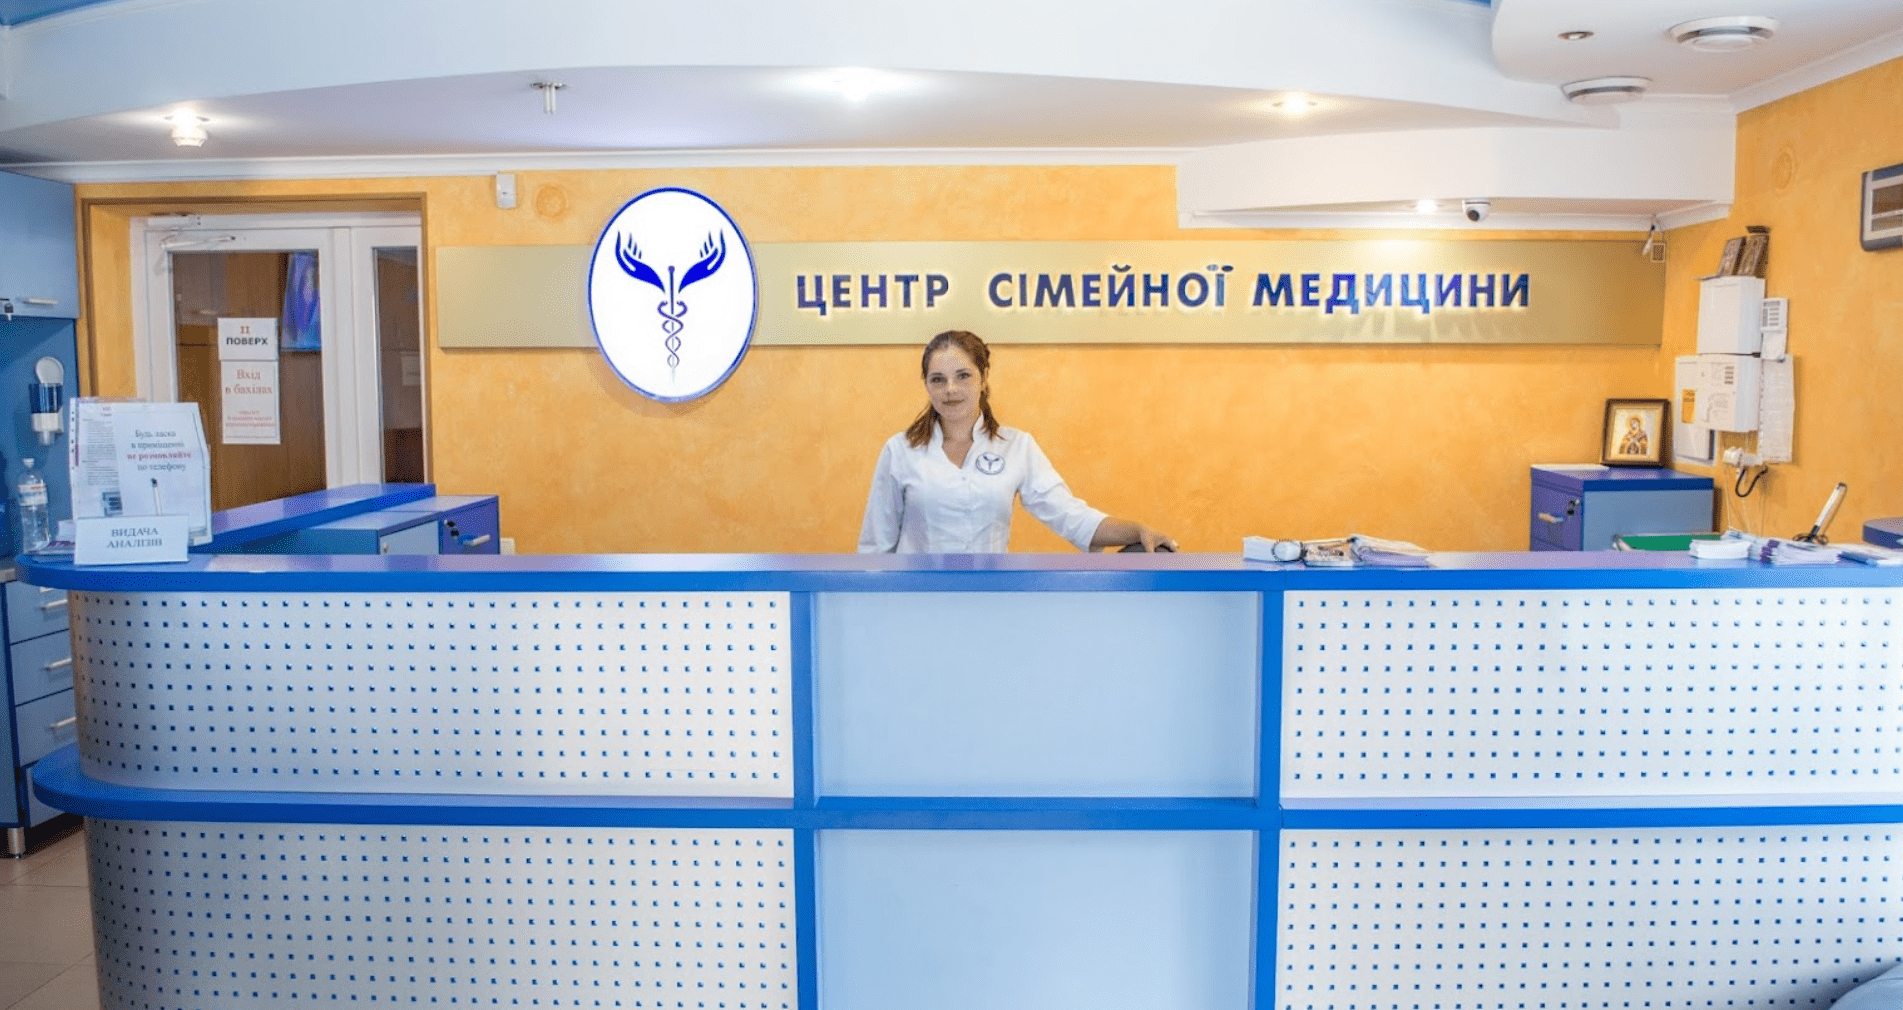 Tsentr-simeynoi-medycyny-reception